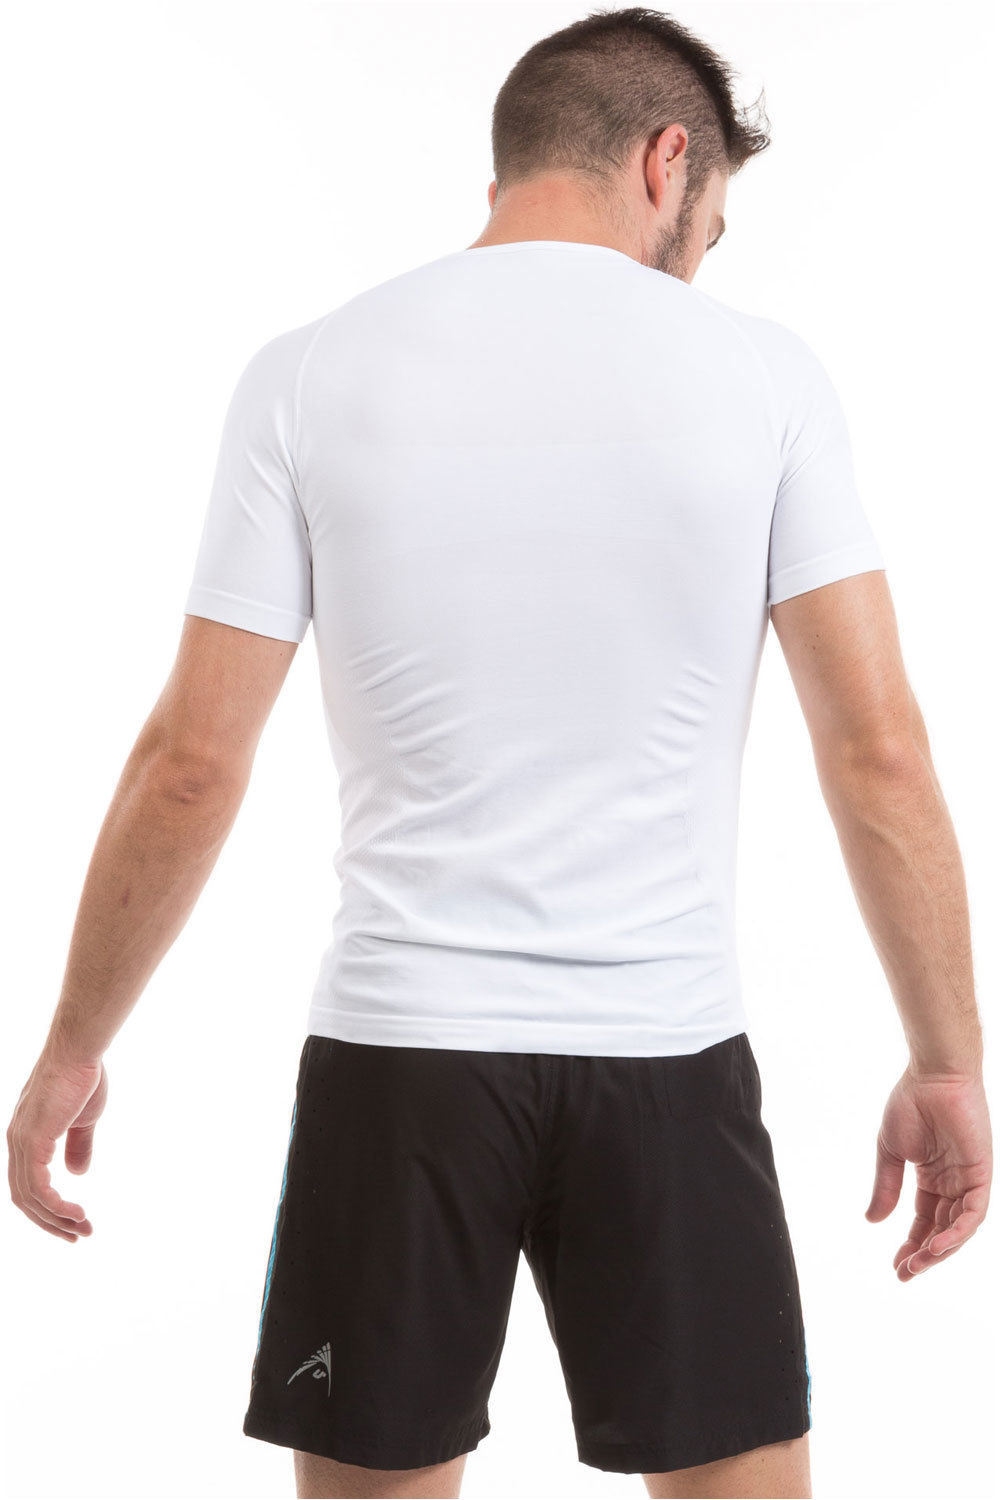 Spyro camiseta térmica manga corta hombre CTA M/C SR WHITE vista trasera